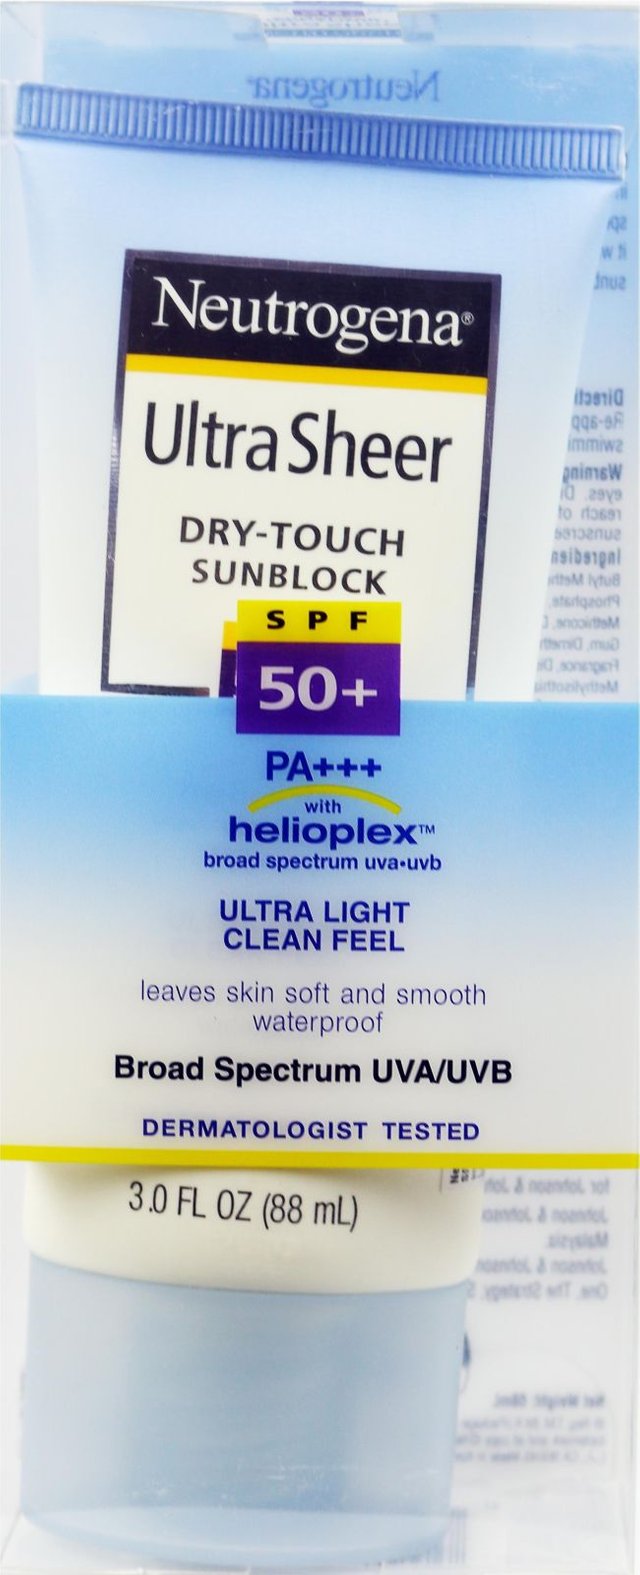 88-ultra-sheer-dry-touch-sunblock-50-neutrogena-original-imaeqbjab8bfrhh2.jpeg